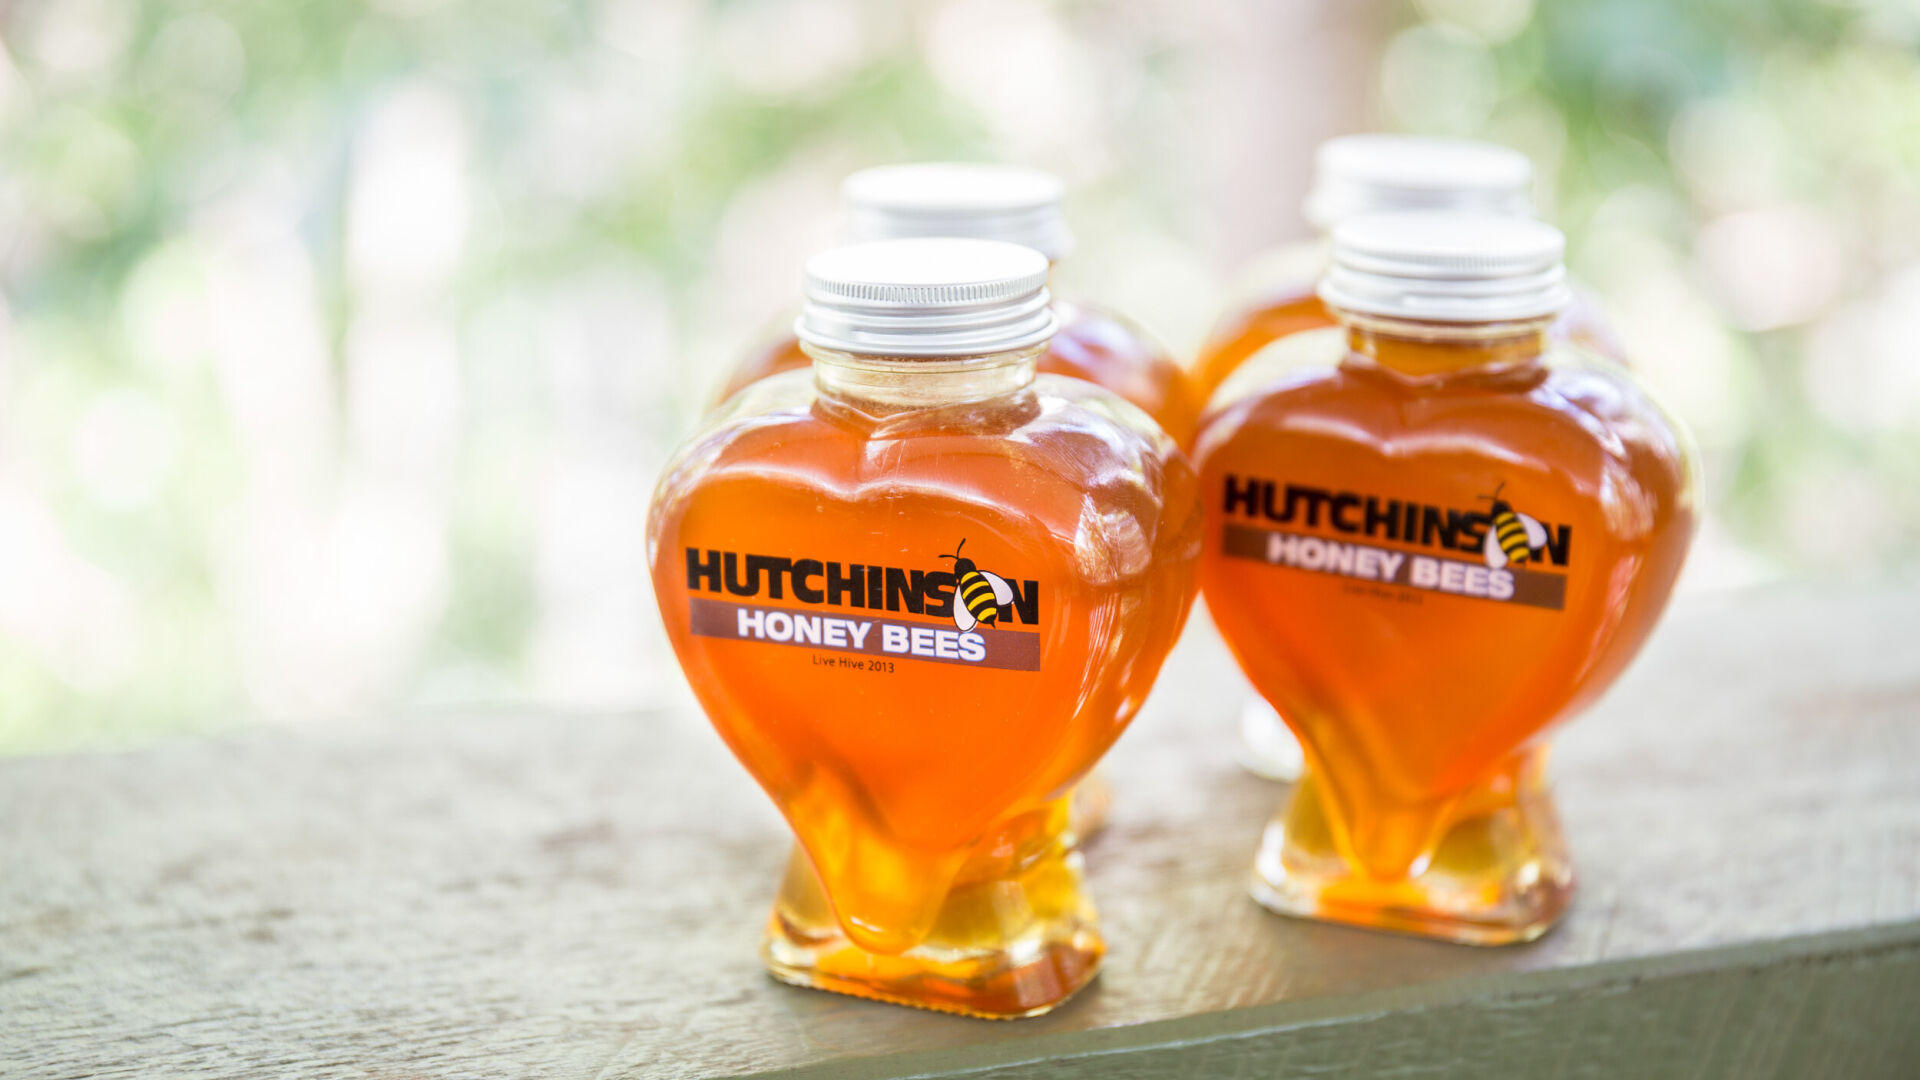 Hutchies' honey